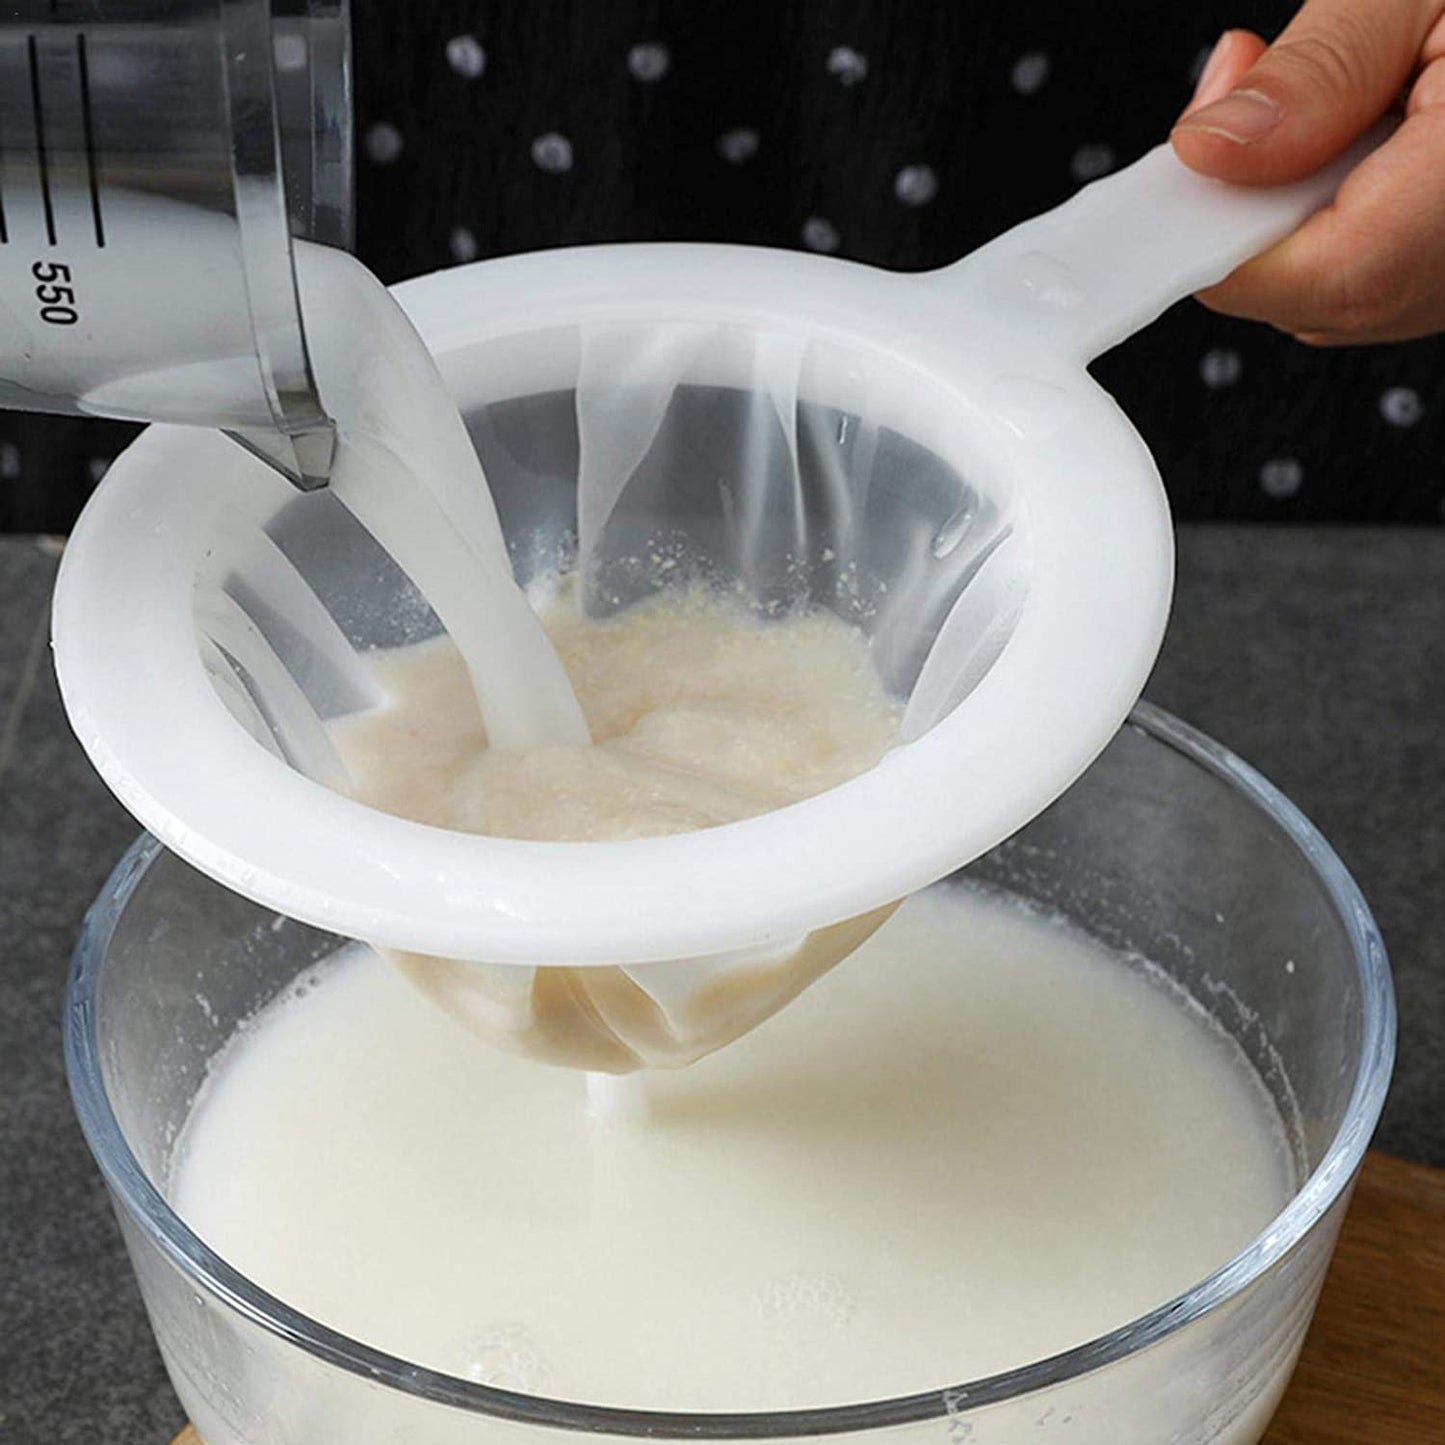 Ultra-fine Mesh Strainer, Multiple Usage Reusable Food Strainer, Kitchen Nylon Mesh Filter Spoon for Soy Milk, Quinoa, Tea, Soup, Sifting, Baking, Straining